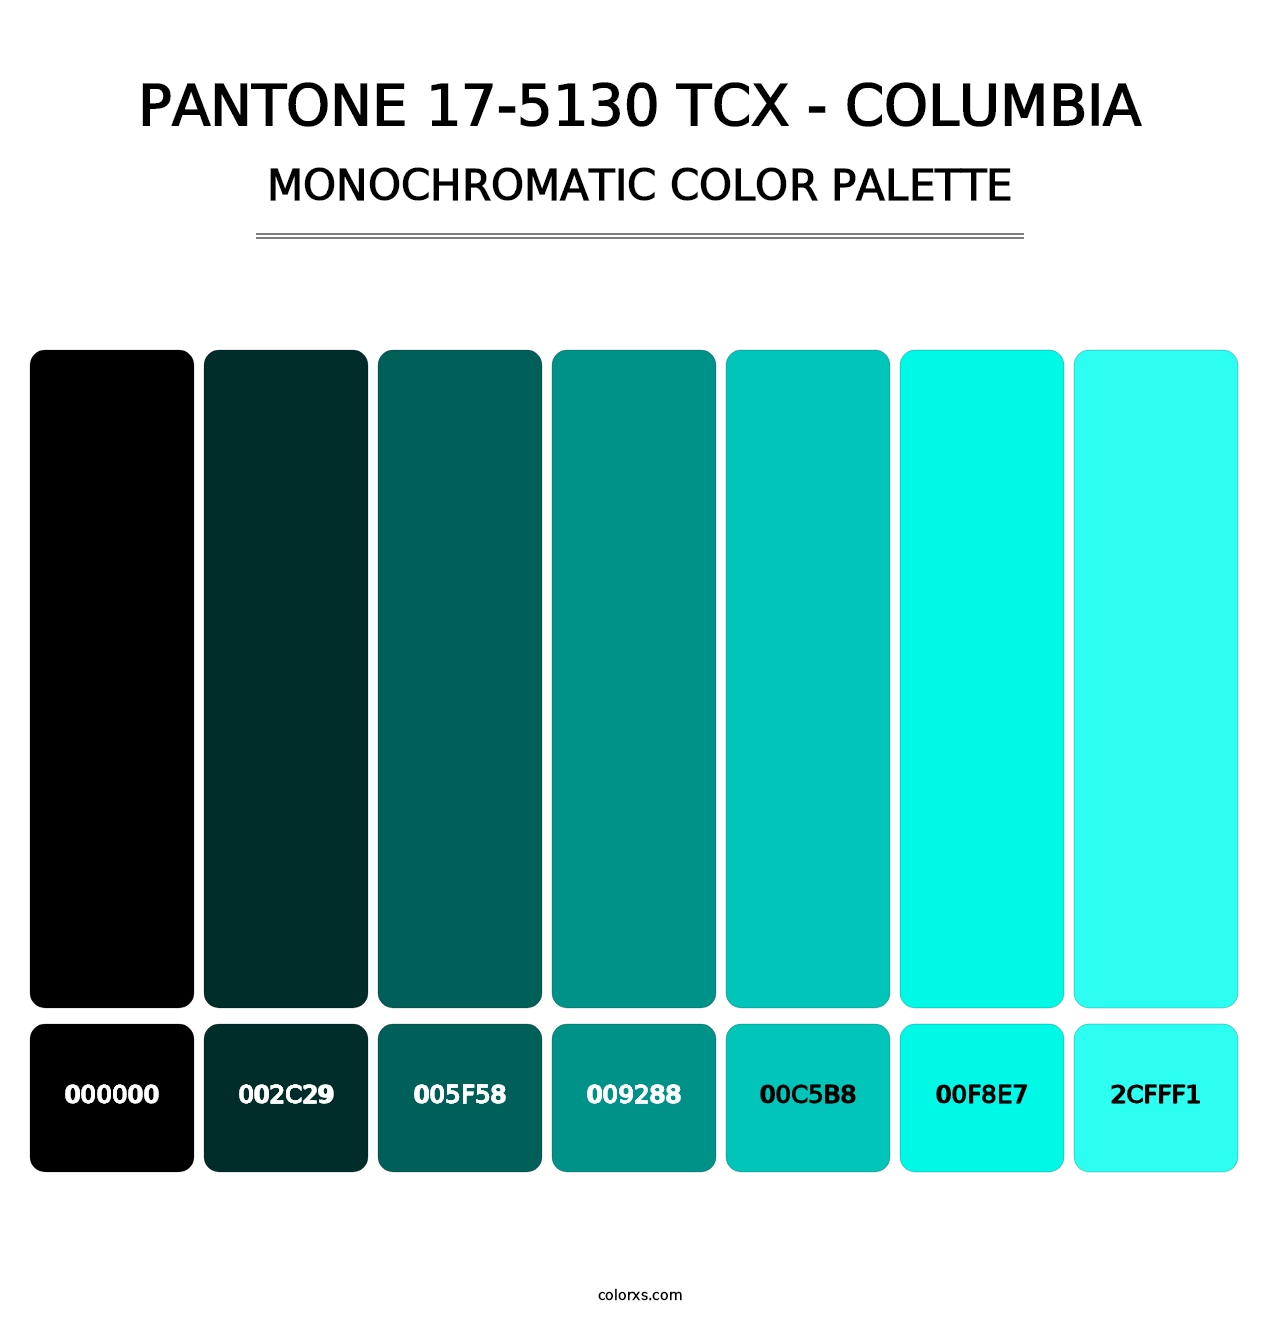 PANTONE 17-5130 TCX - Columbia - Monochromatic Color Palette